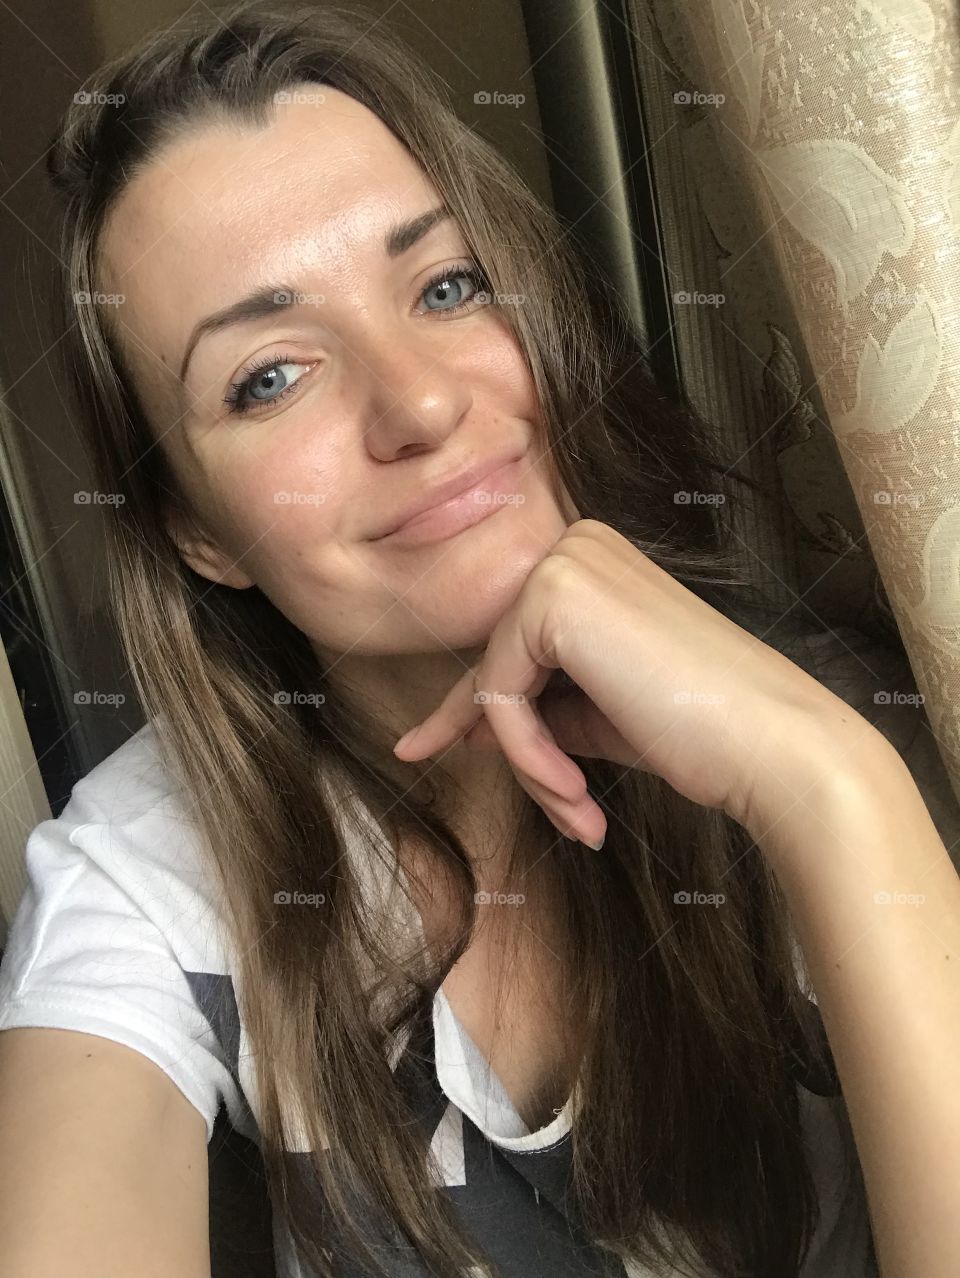 Face Russian girl. Nice girl. Smile. 